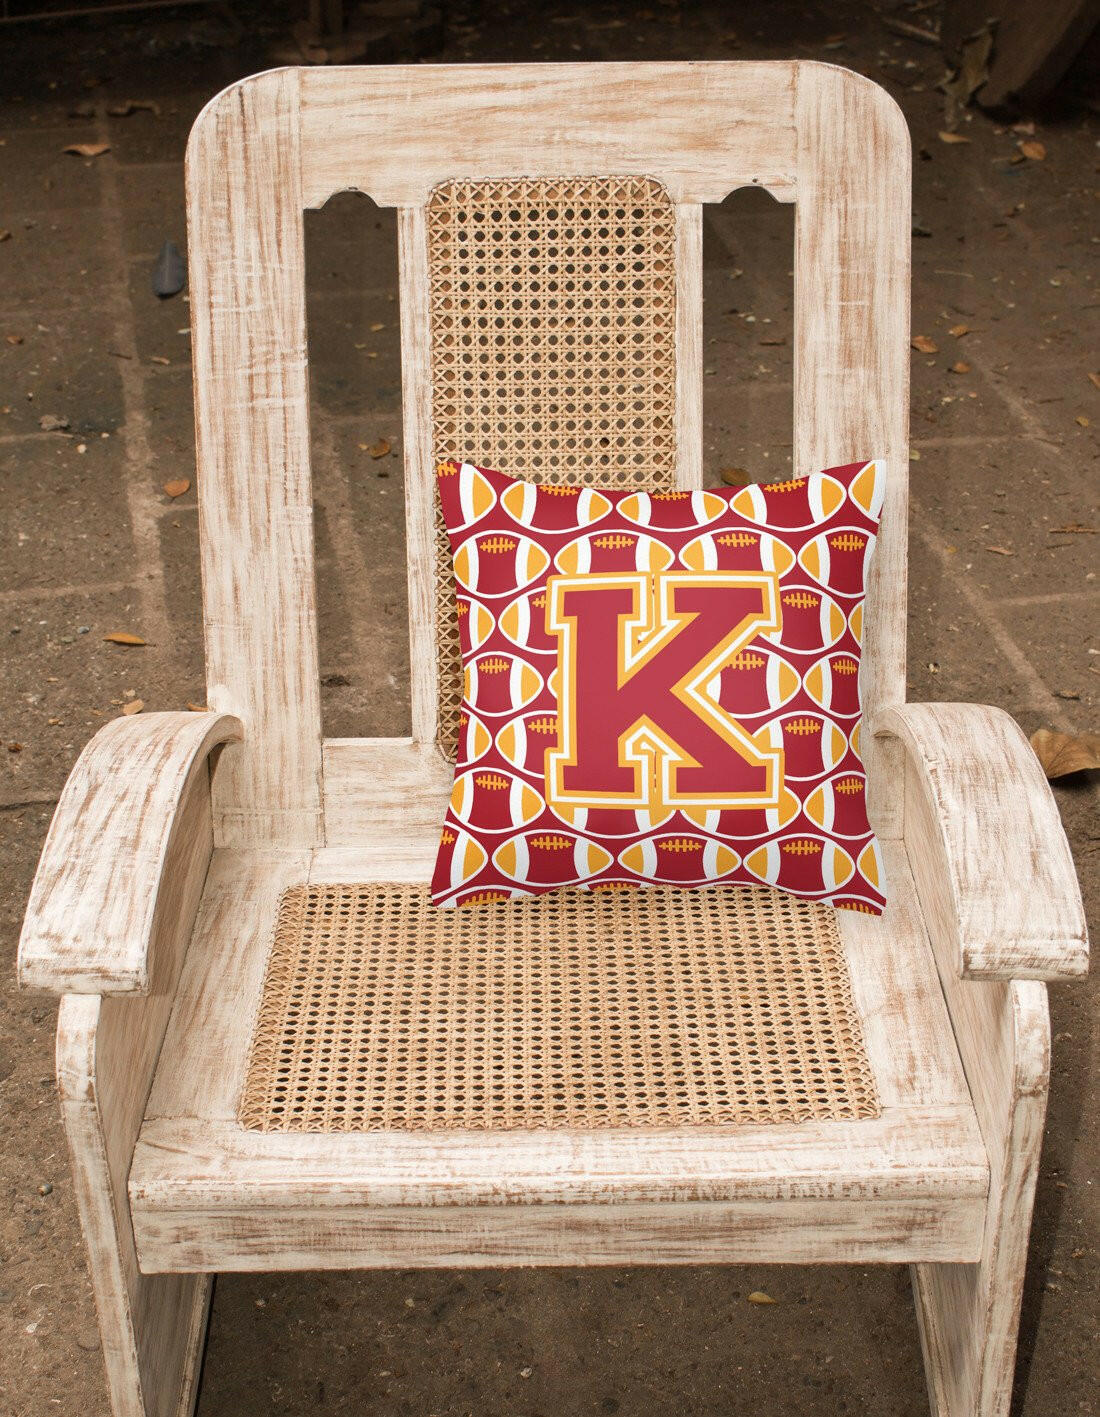 Letter K Football Cardinal and Gold Fabric Decorative Pillow CJ1070-KPW1414 by Caroline's Treasures